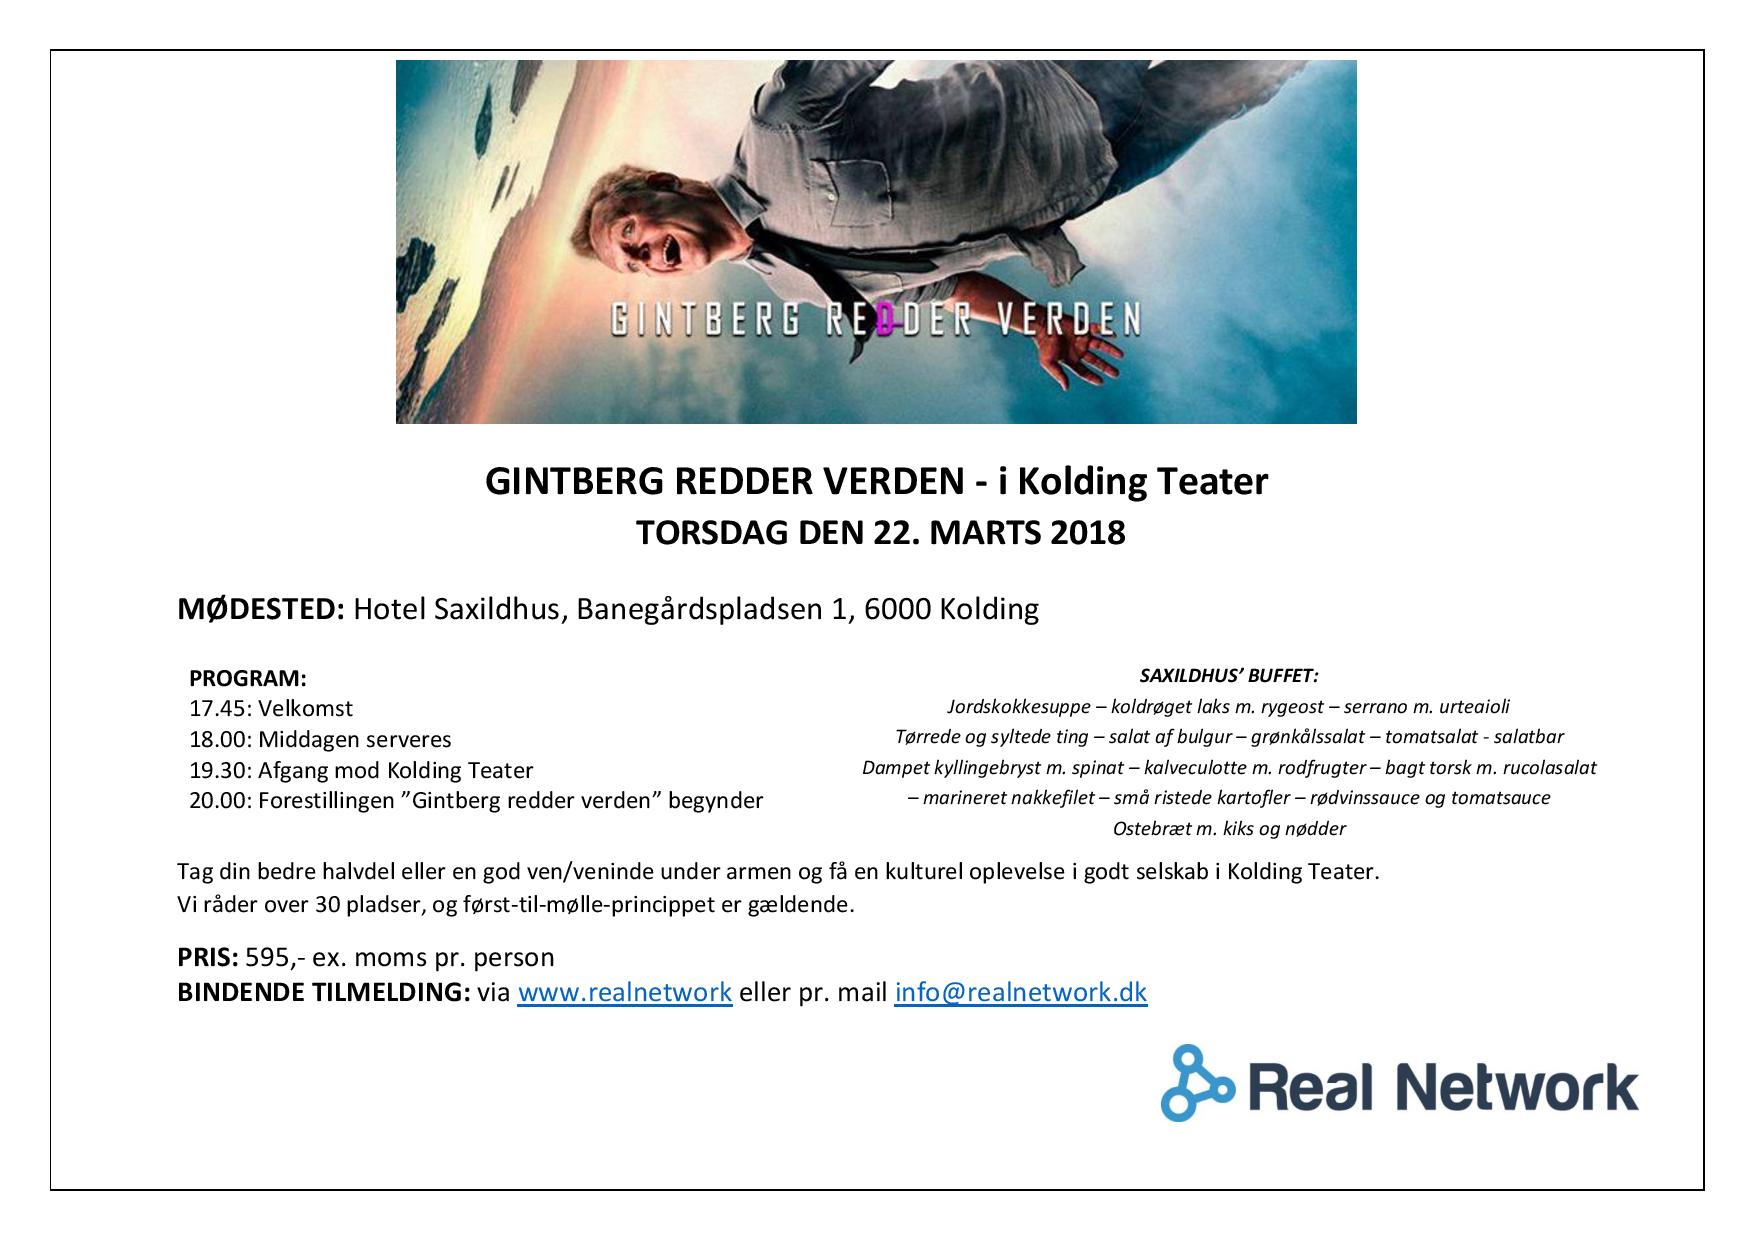 Gintberg redder - Real Network